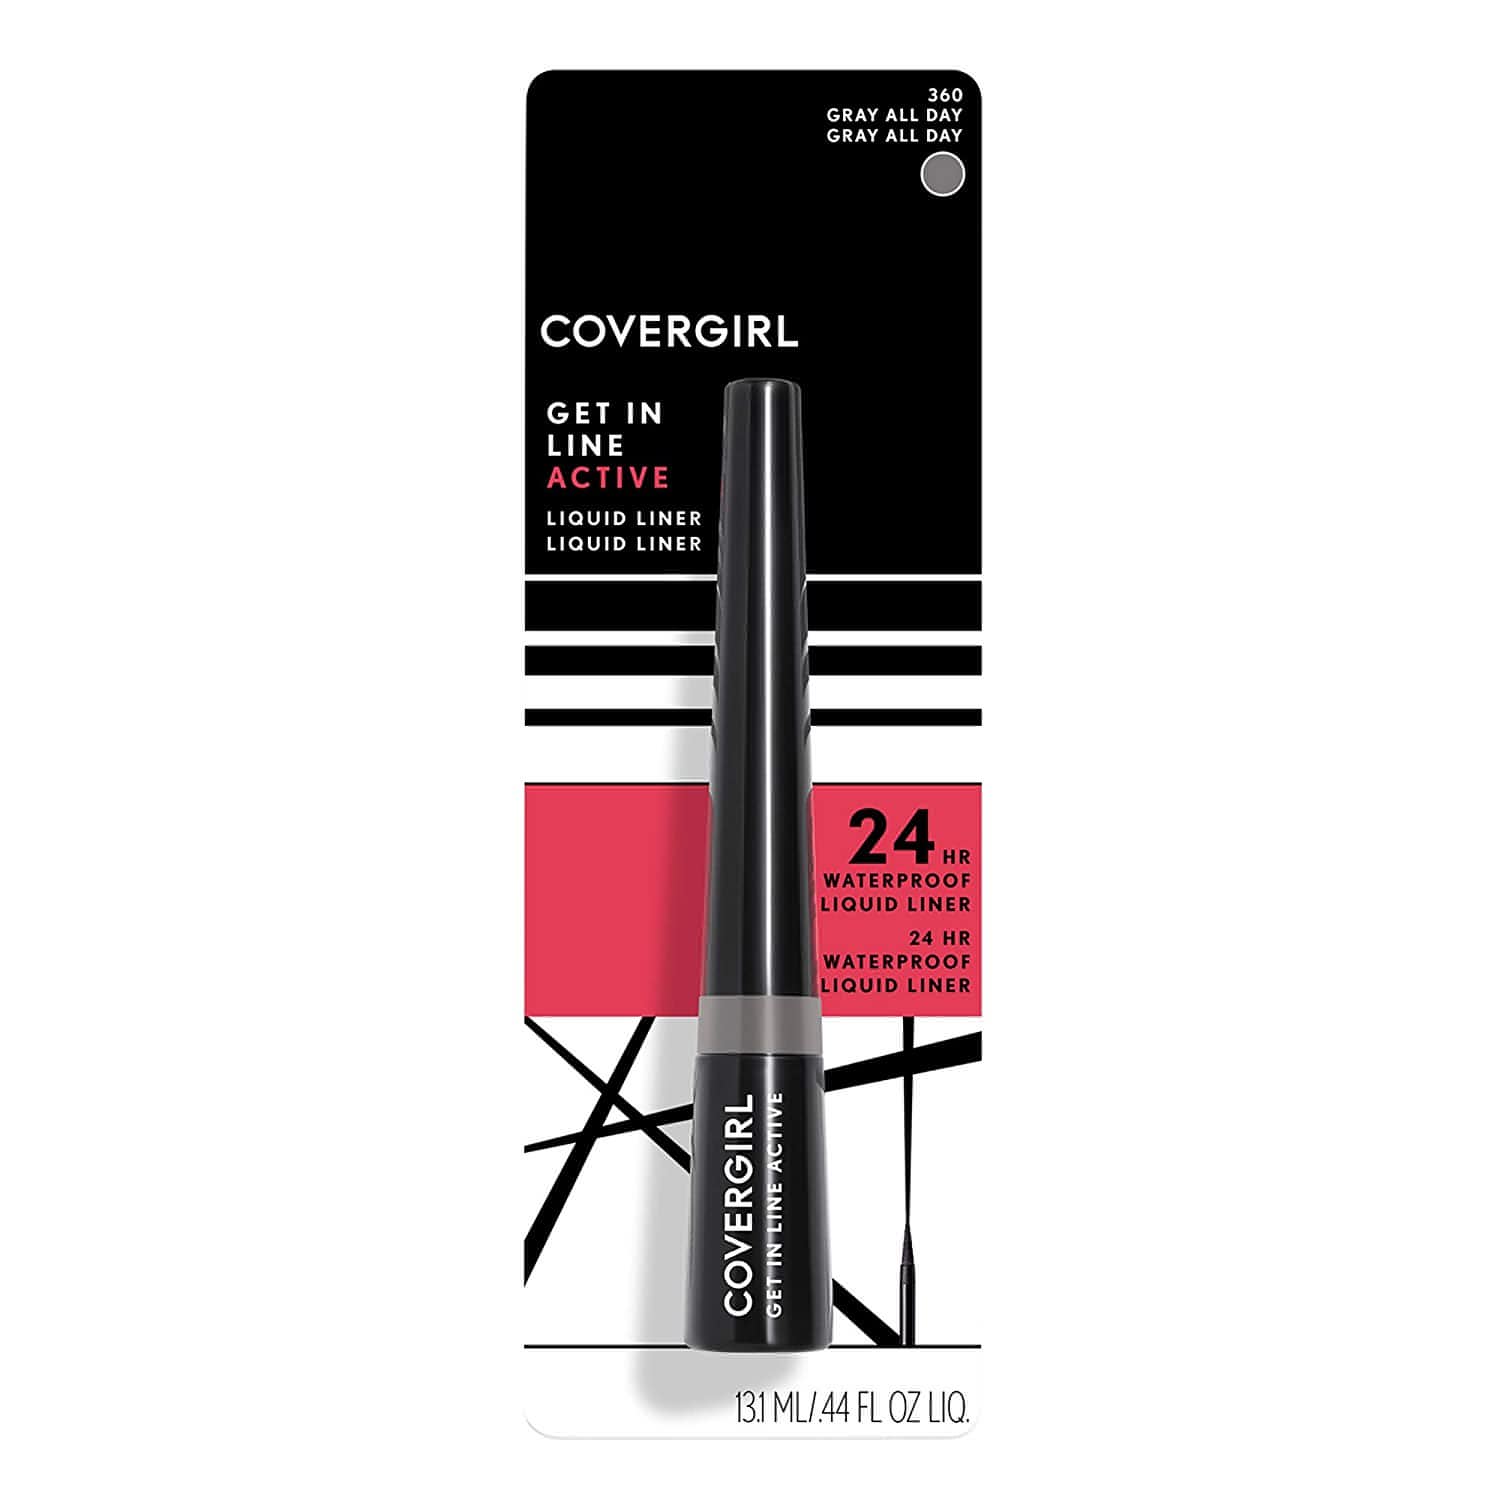 COVERGIRL Get in Line Active Eyeliner, 360 Gray All Day, 0.08 oz - Brandat Outlet